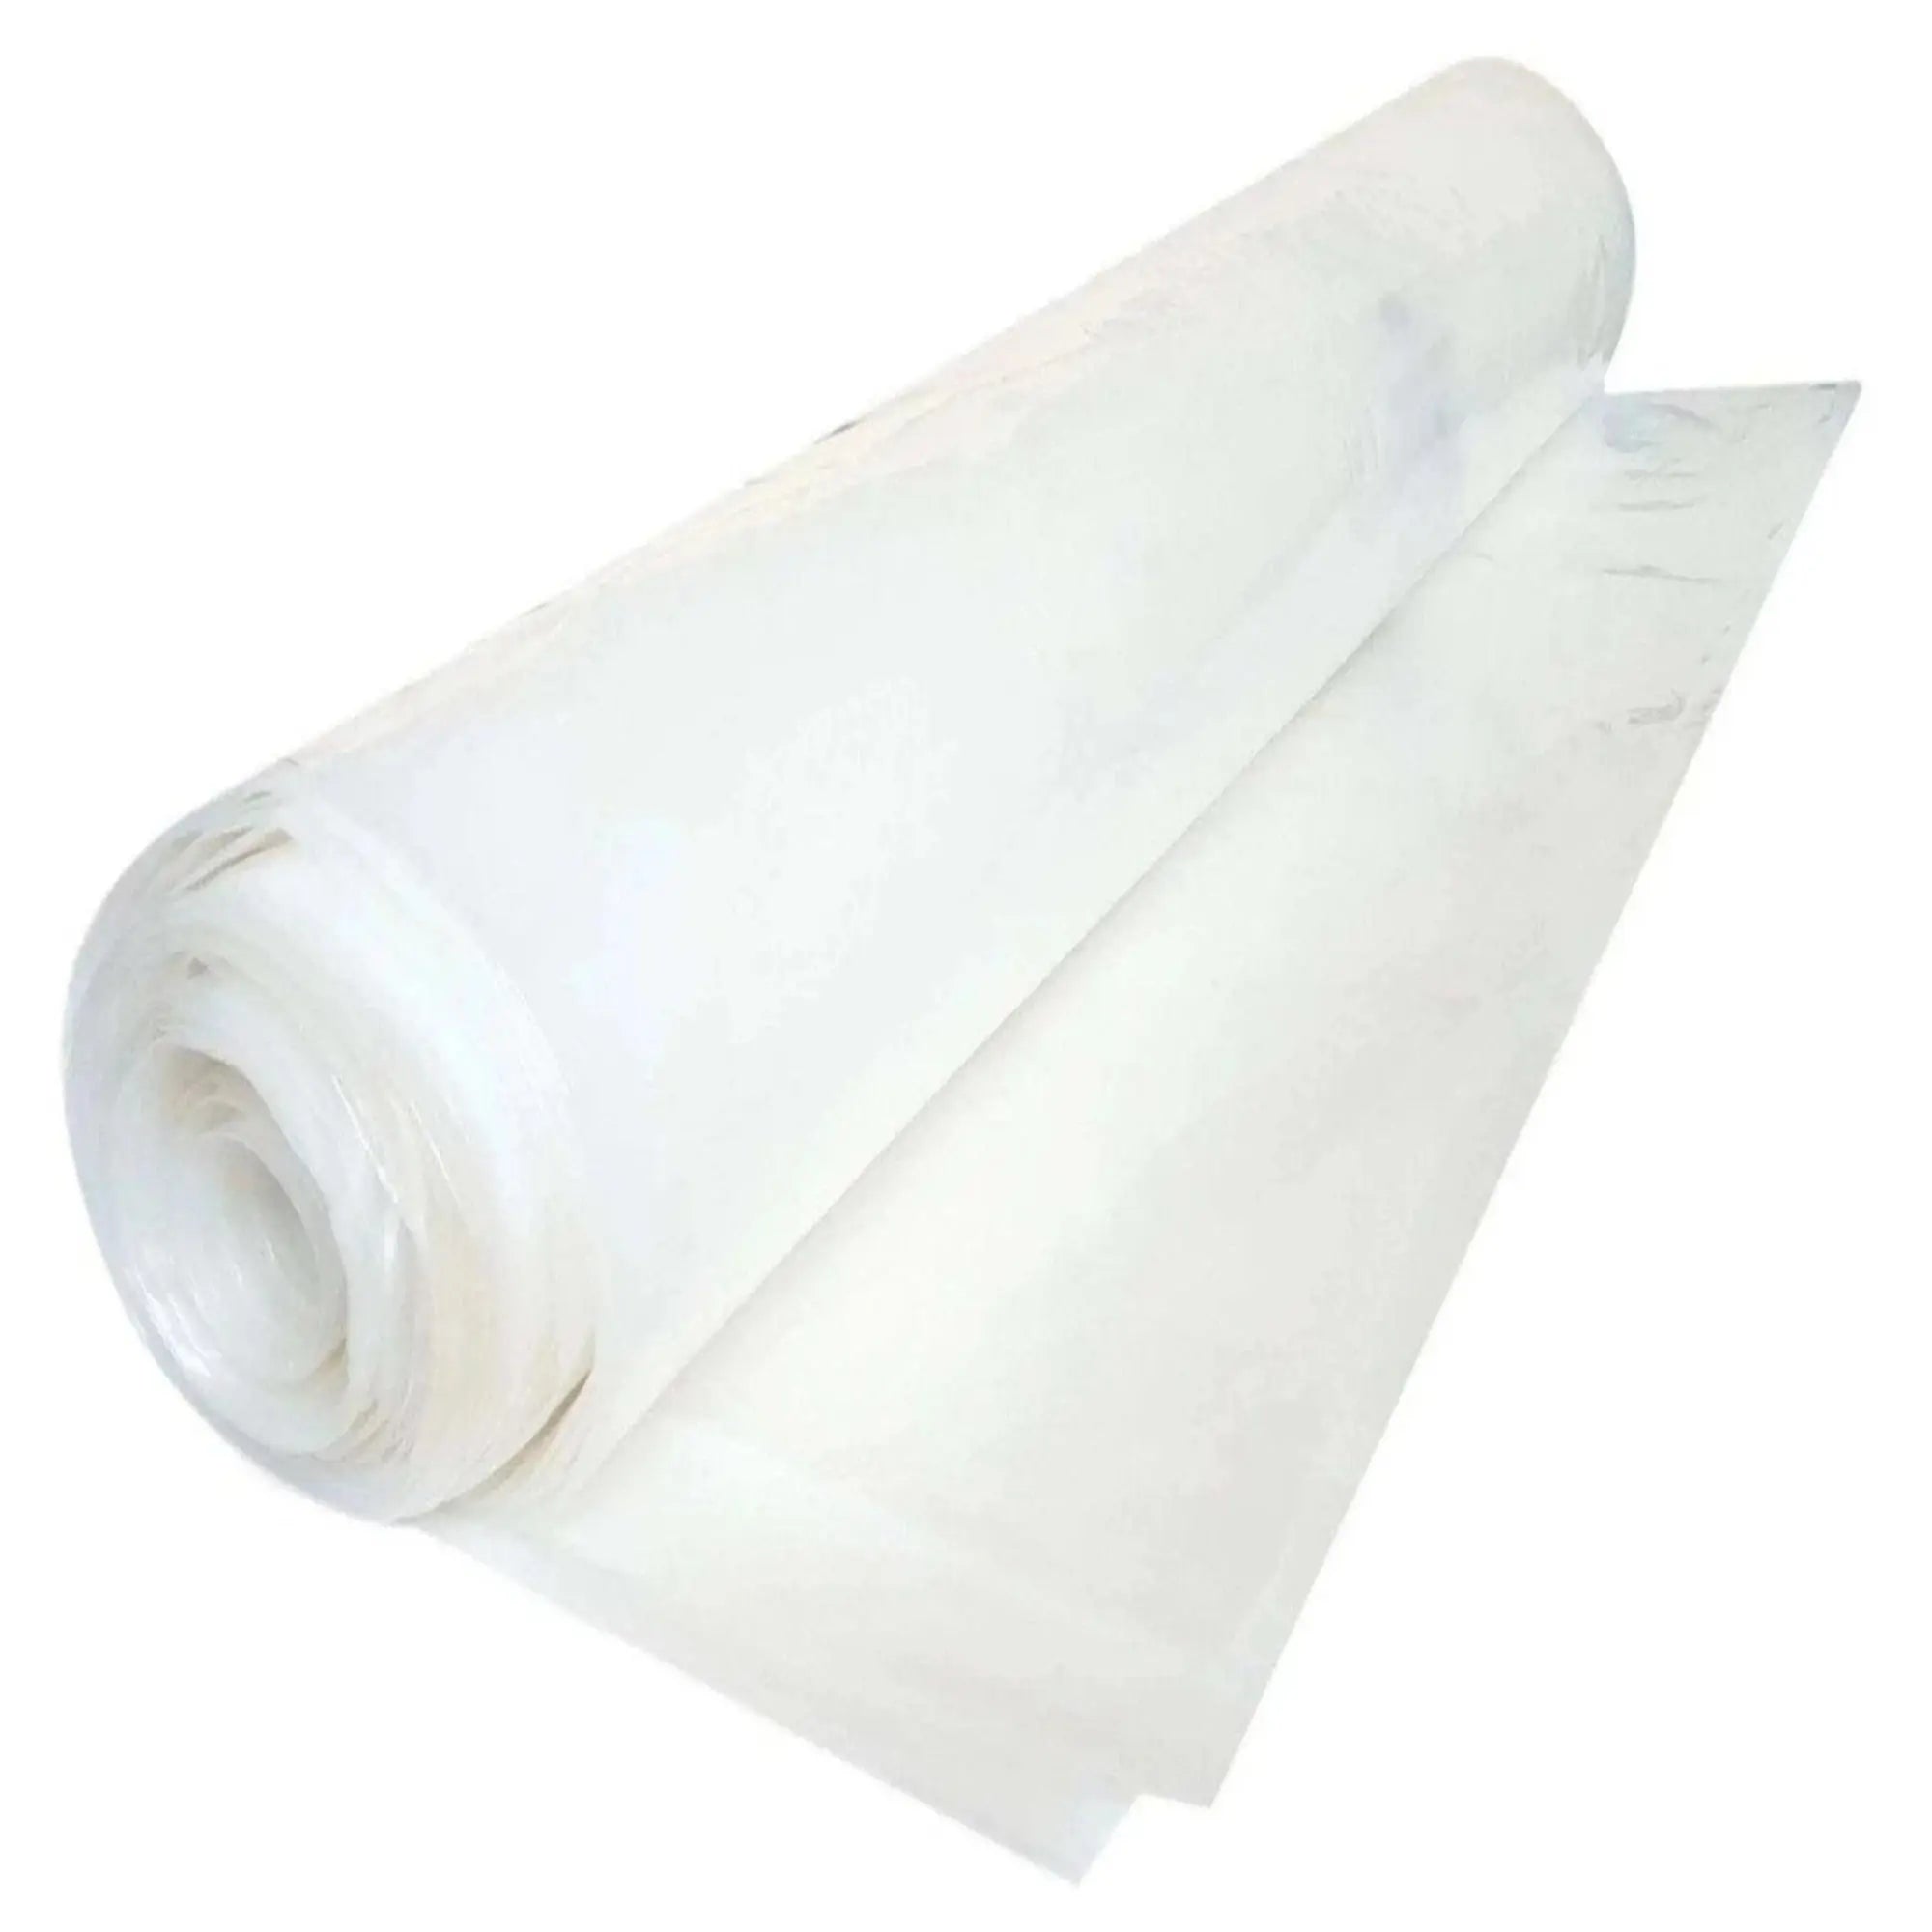 1/8 x 1 x 75' Polyethylene Foam Tapes: Box of 6